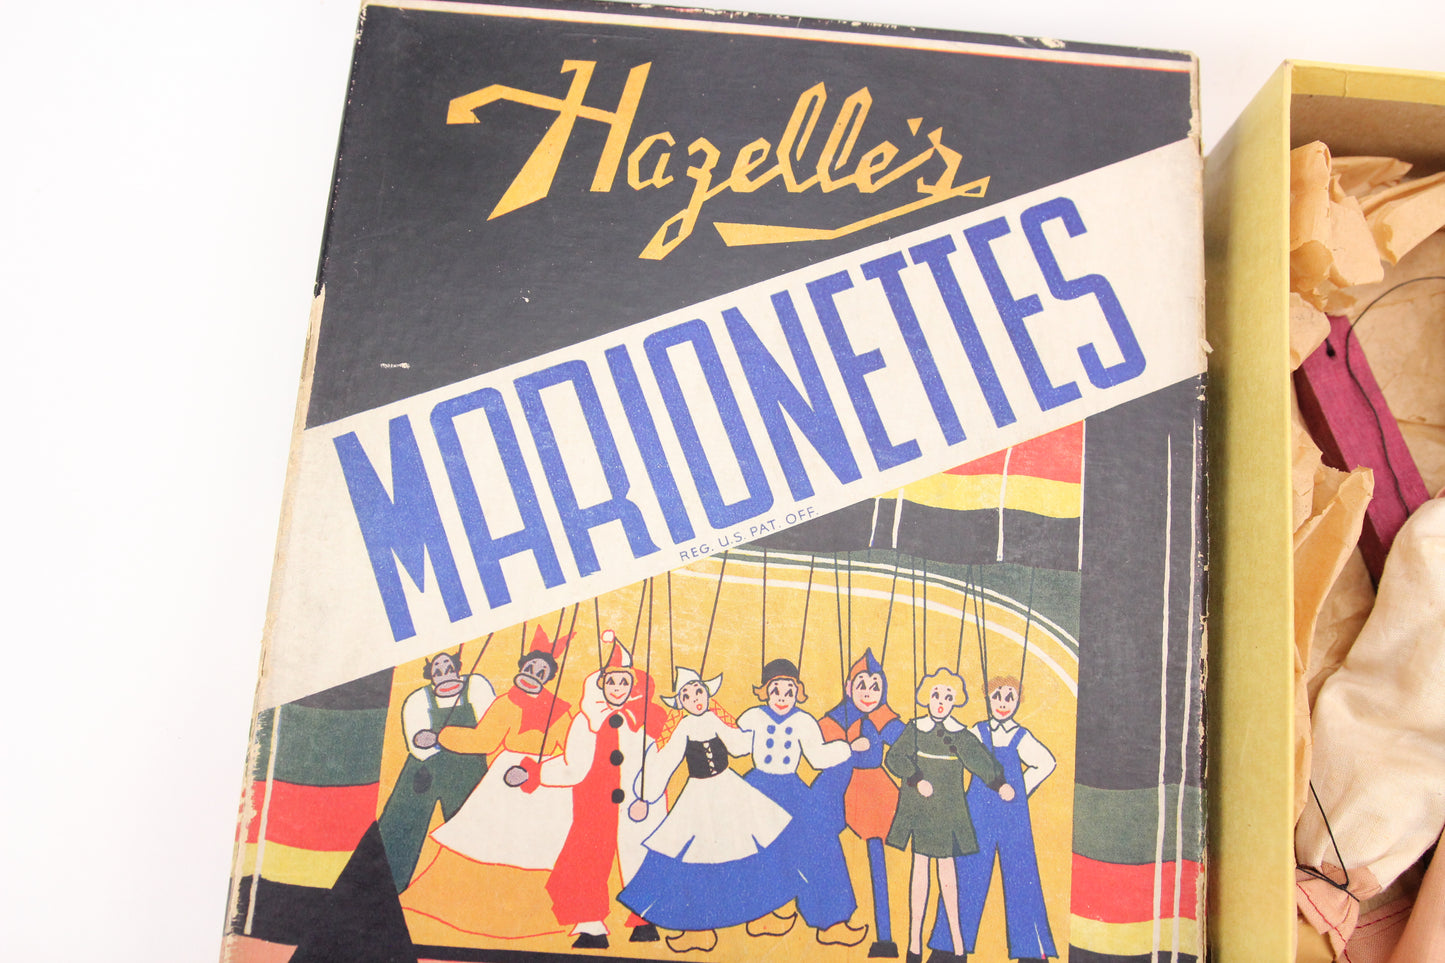 Hazelle's Marionettes No. 102 "Jester" Marionette Puppet in Original Box, 12"